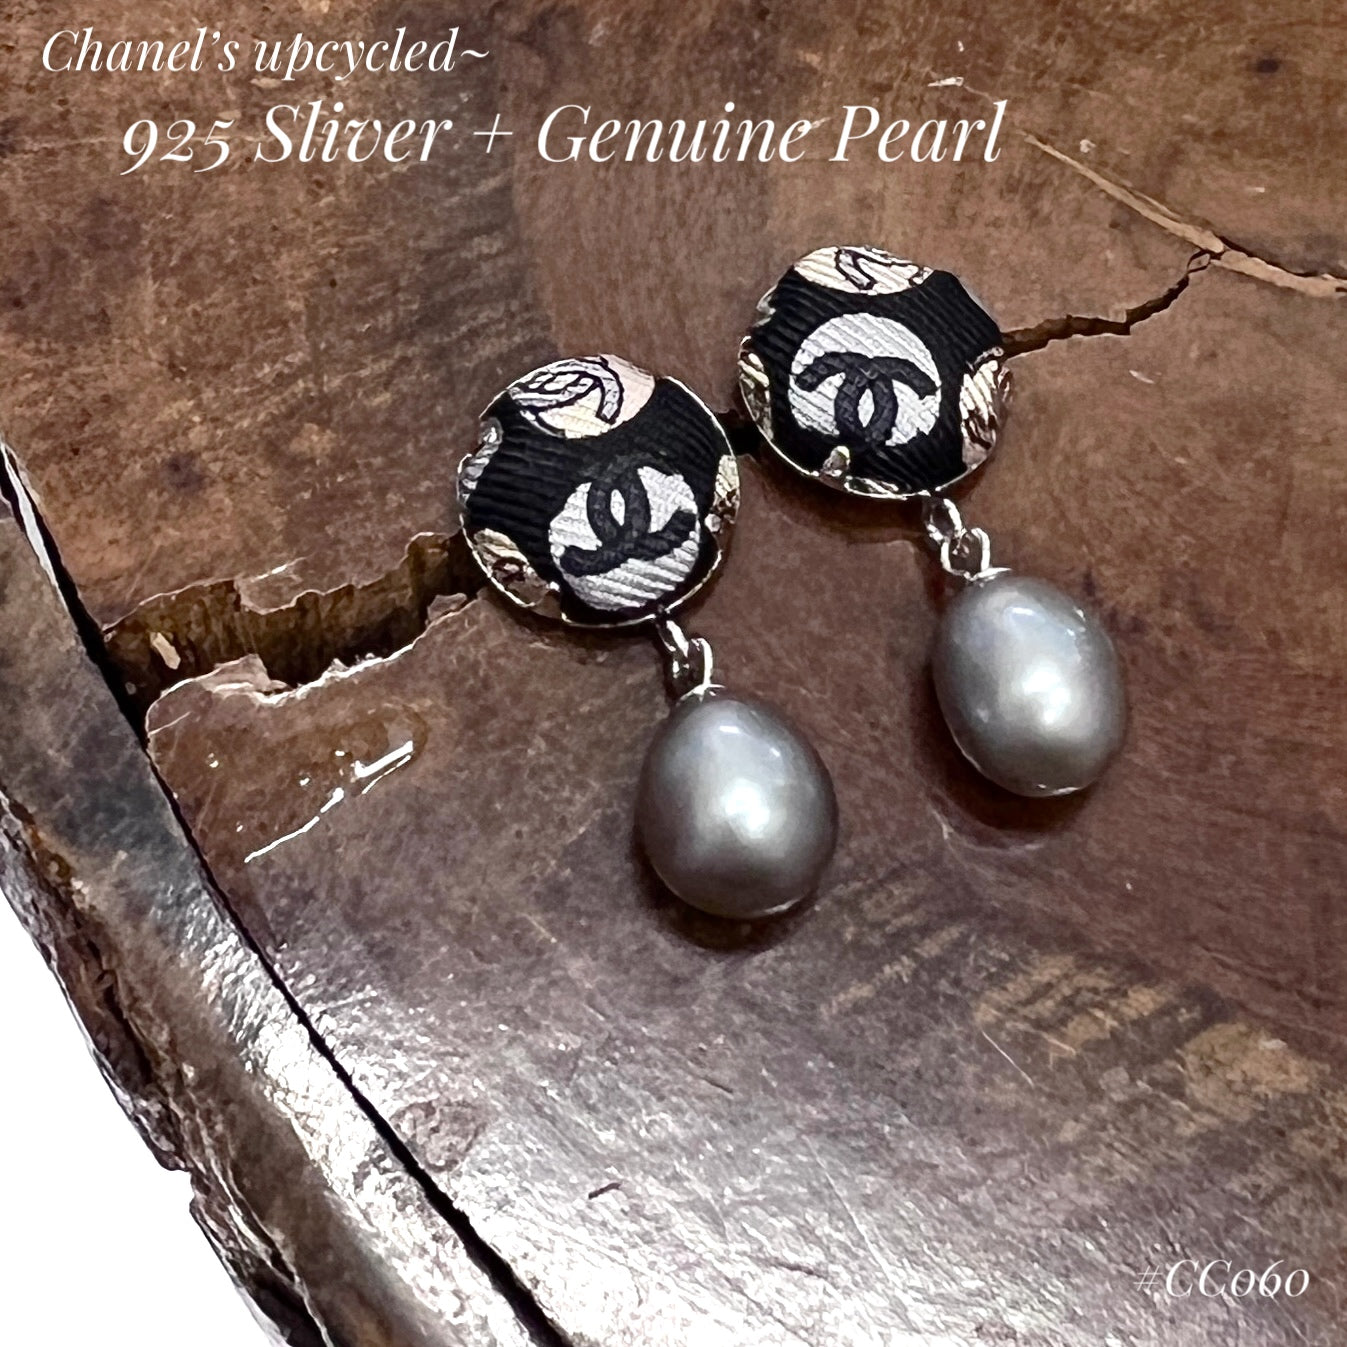 CC- Black, Grey & Beige with CC logo bubble CC060-  genuine Pearl earrings